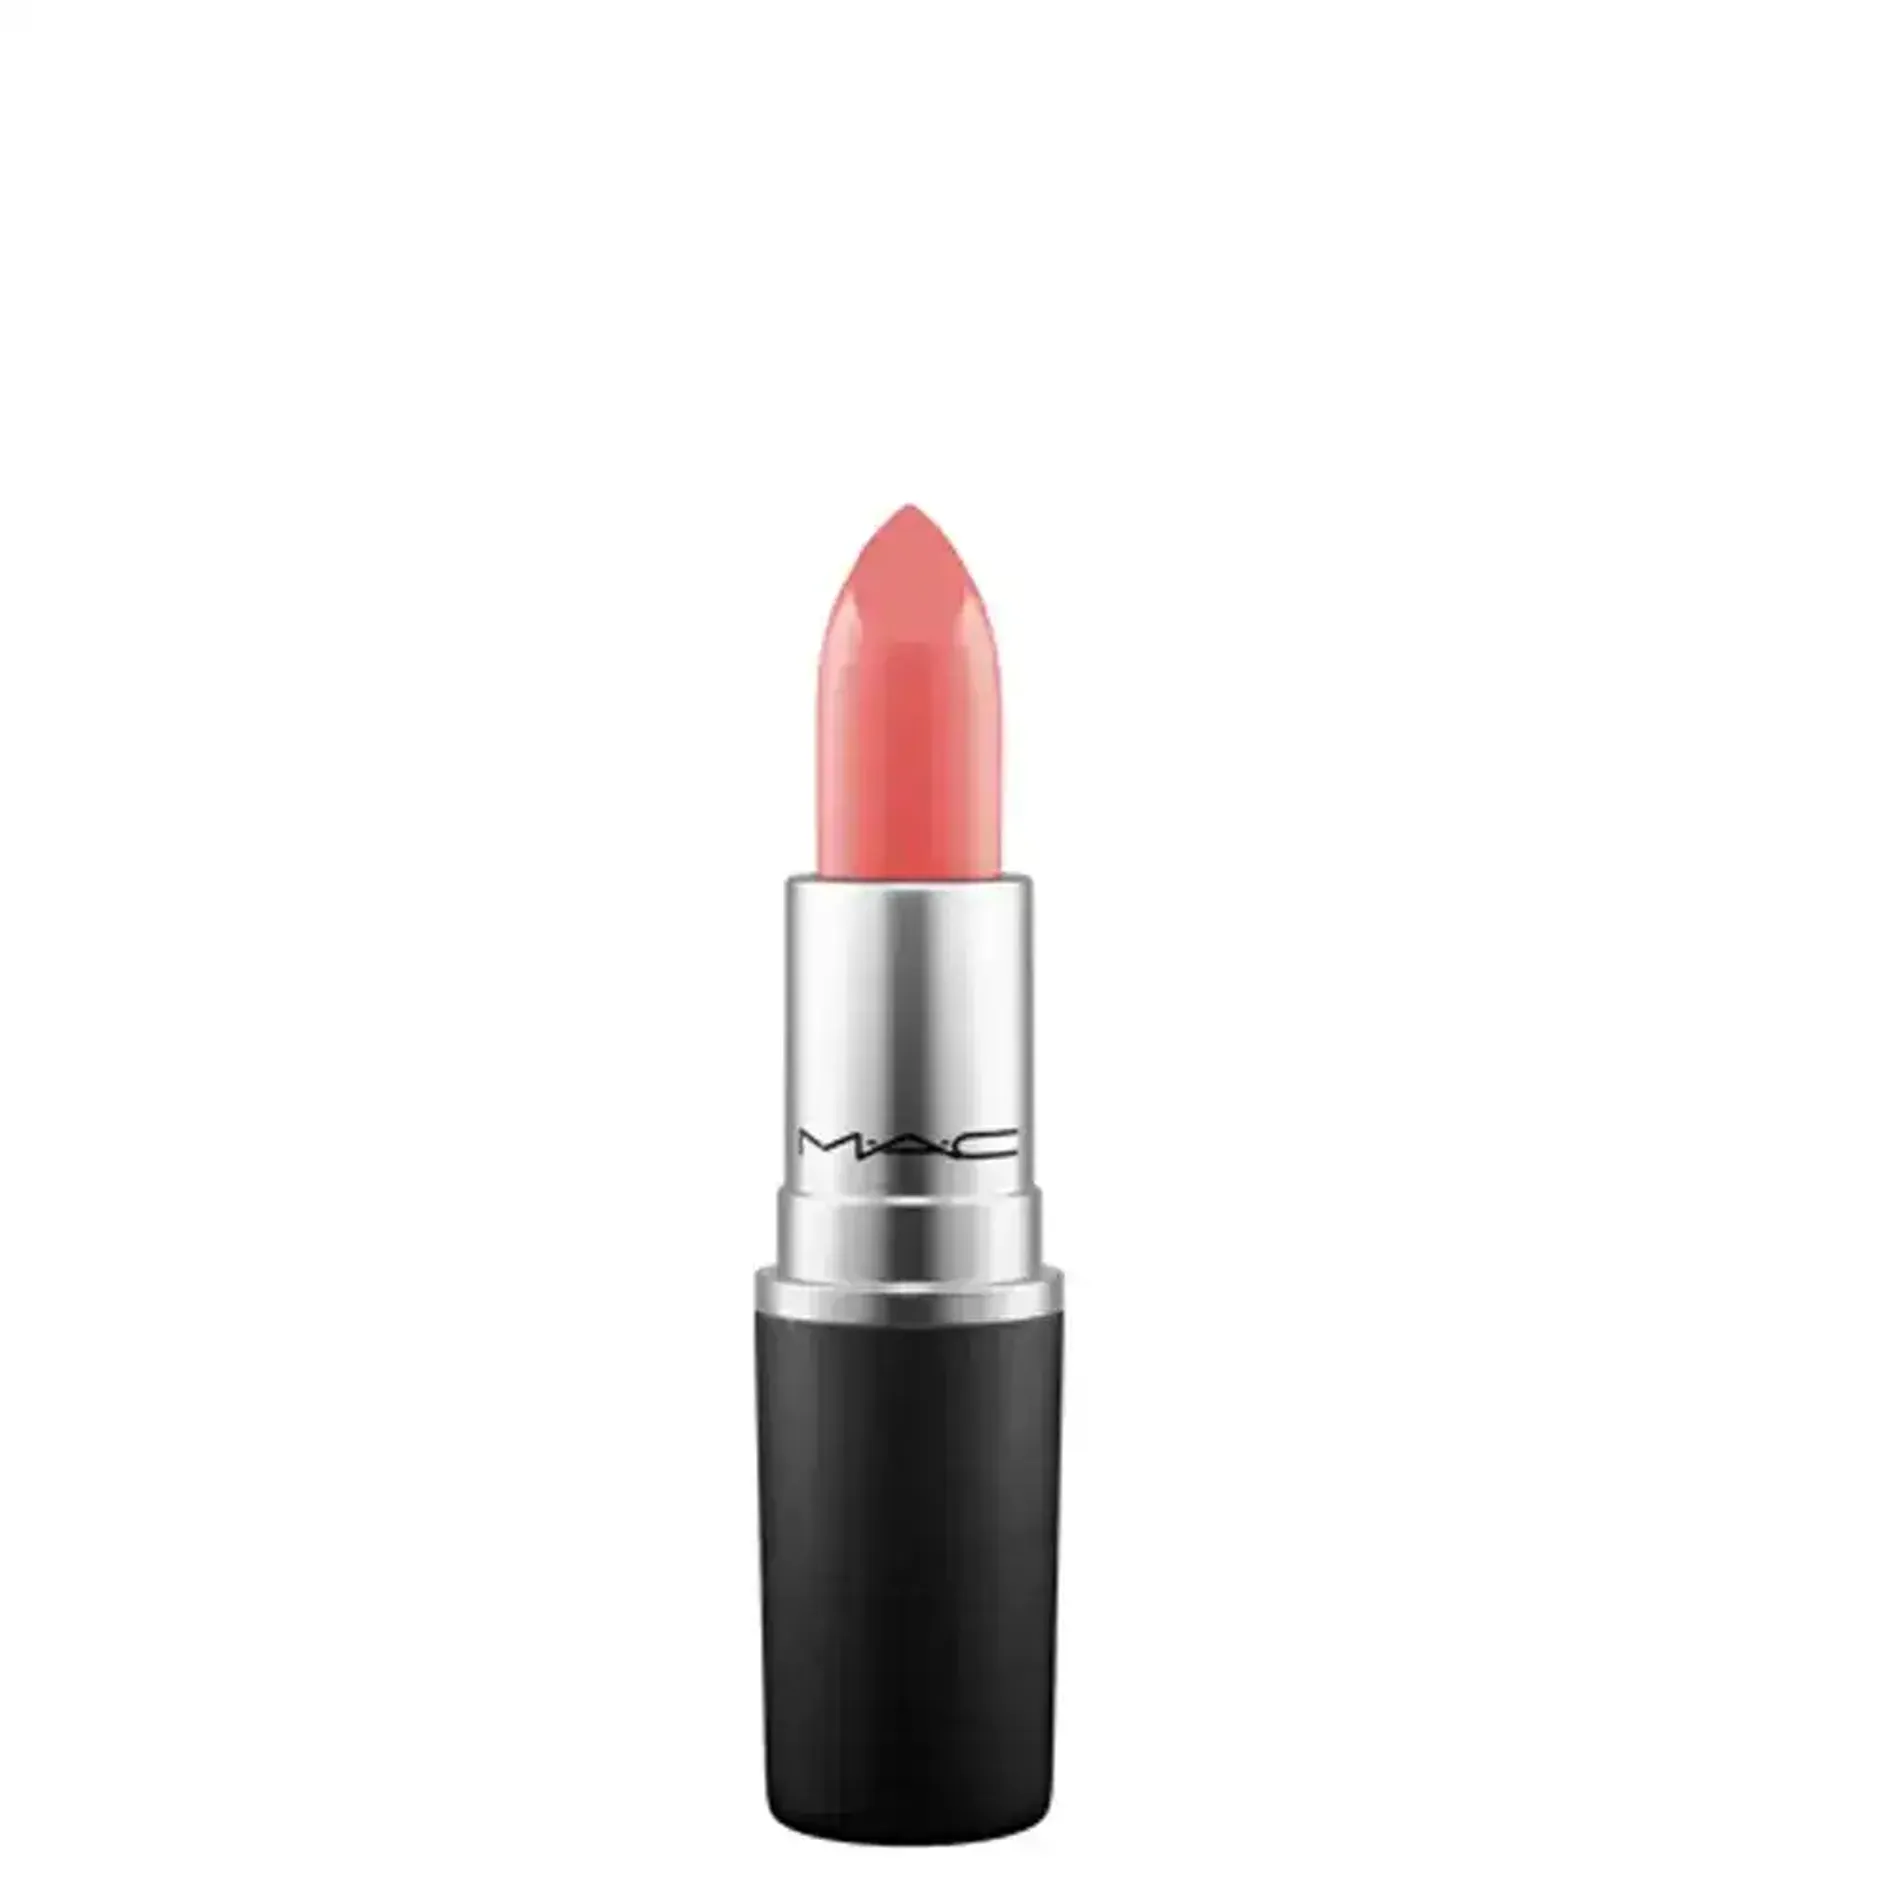 son-thoi-mac-lustre-lipstick-3g-8